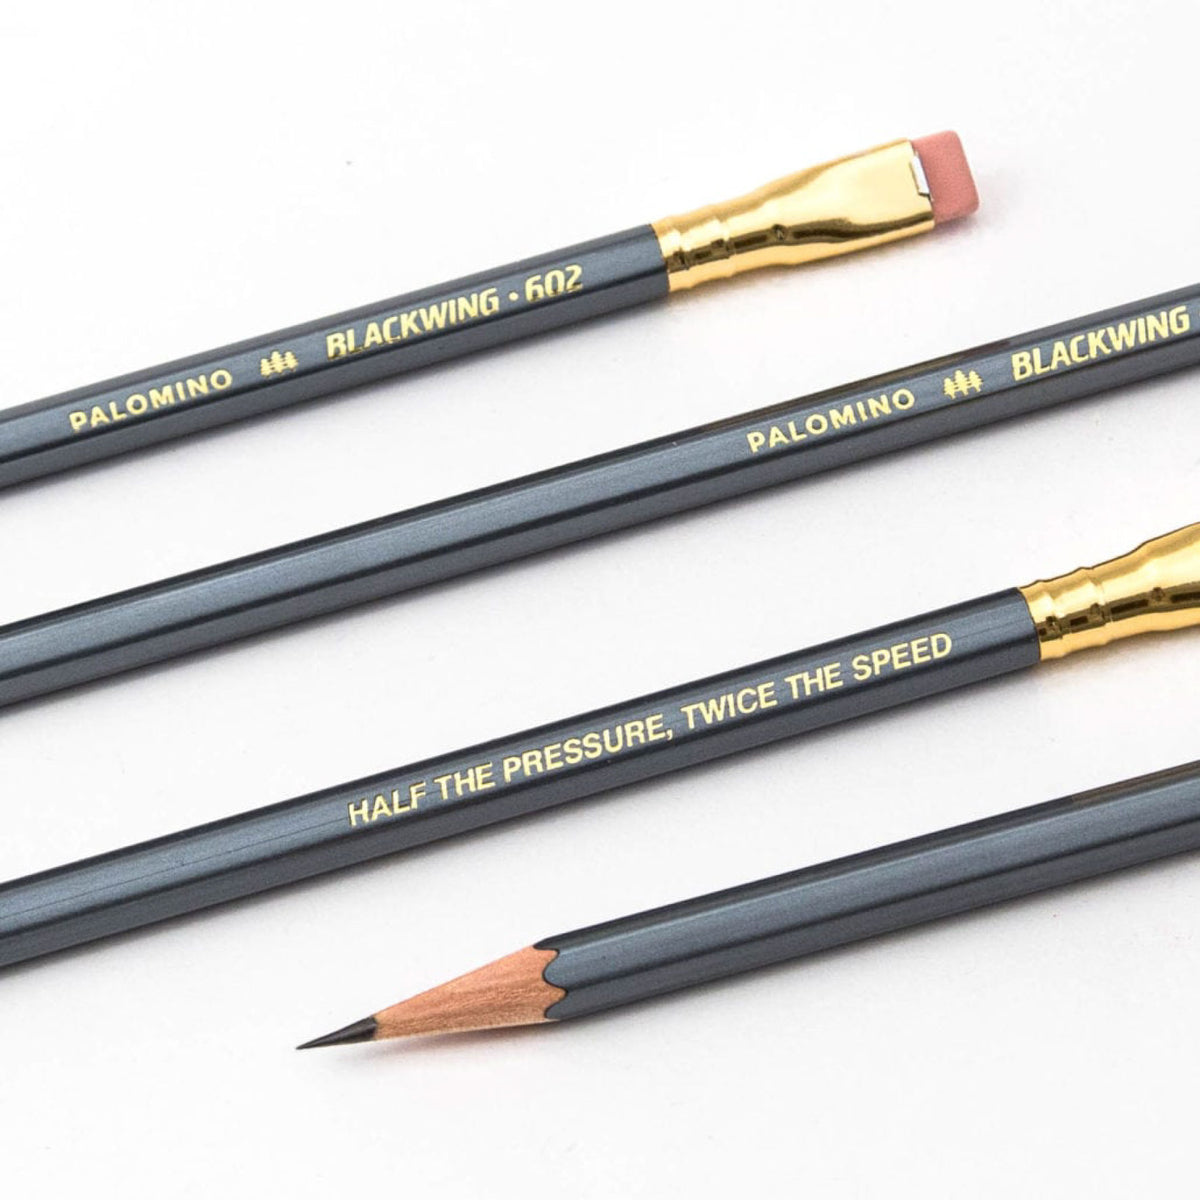 Palomino Blackwing - Pencil - Blackwing 602 - Pack of 2